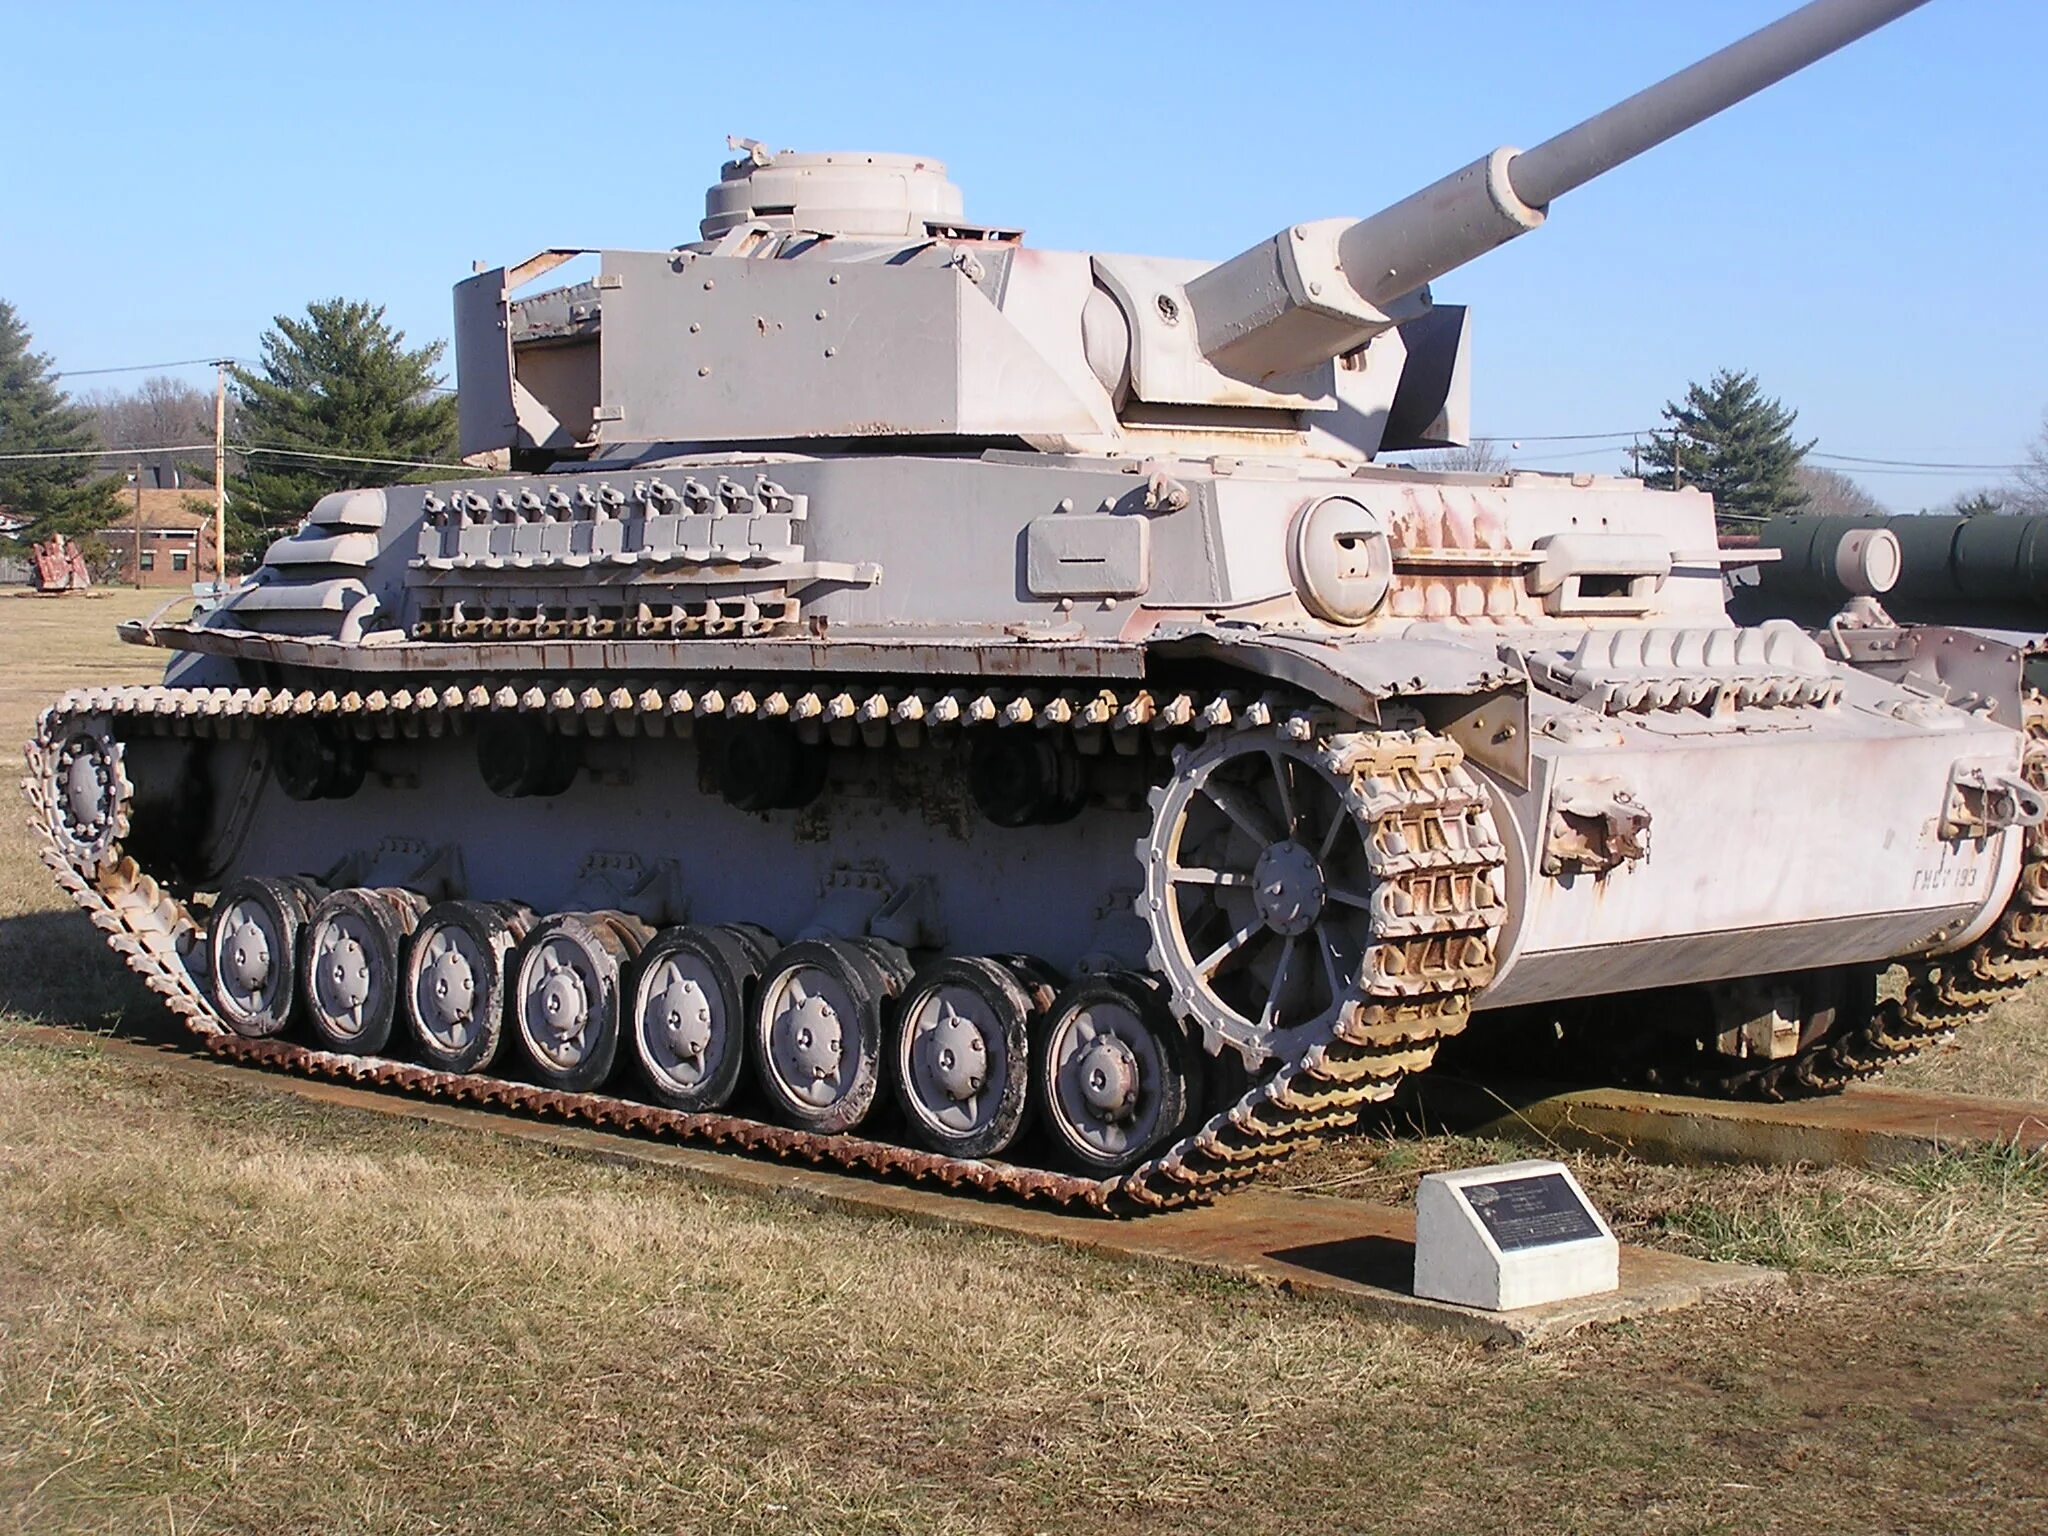 Panzer iv. Танк PZ 4 G. Pz4 hydra. Панзер м 10. Рейнметалл Панзер.